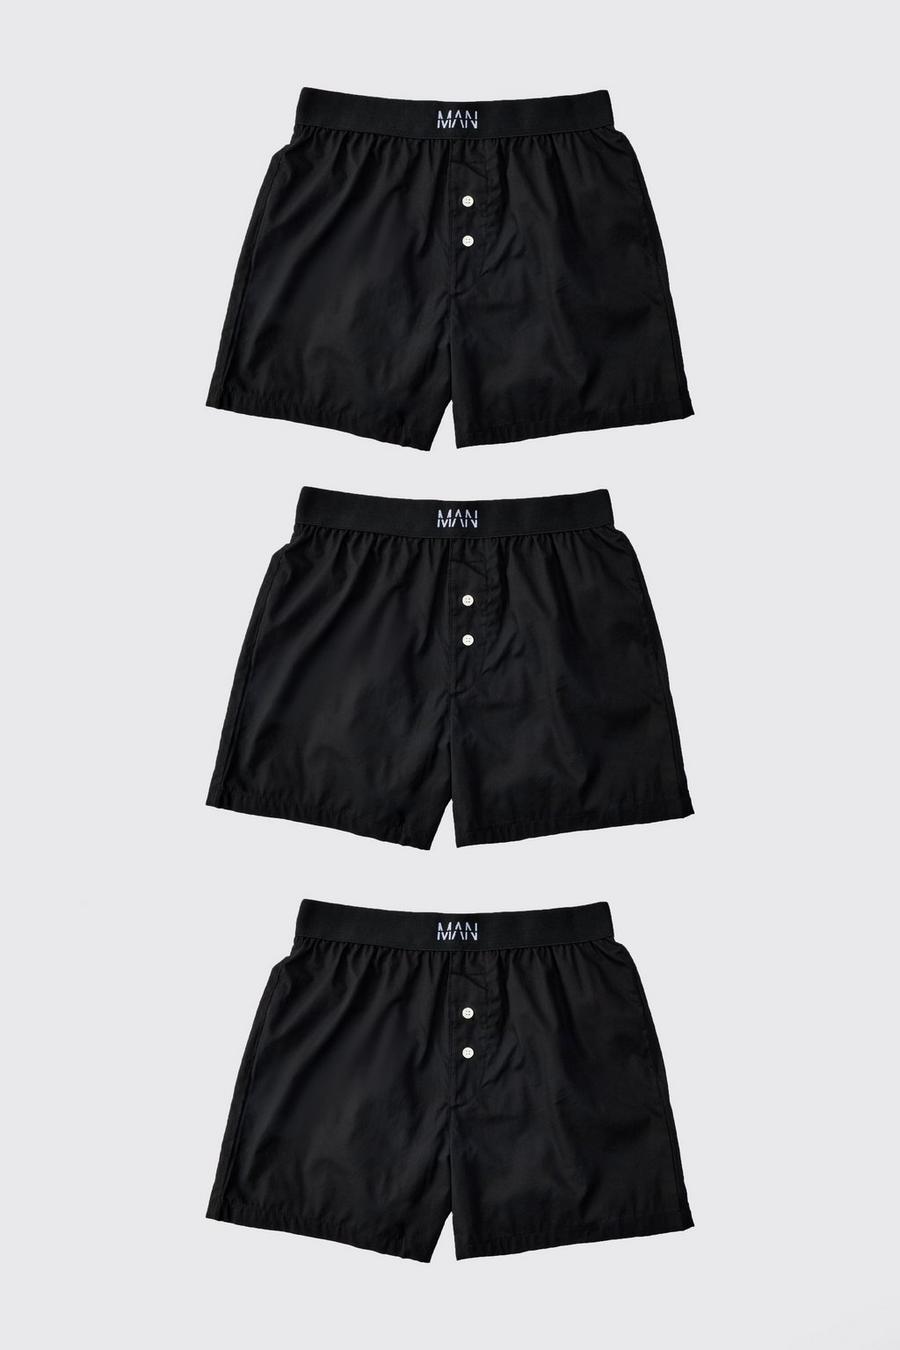 Black 3 Pack Original Man Woven Boxer Shorts image number 1